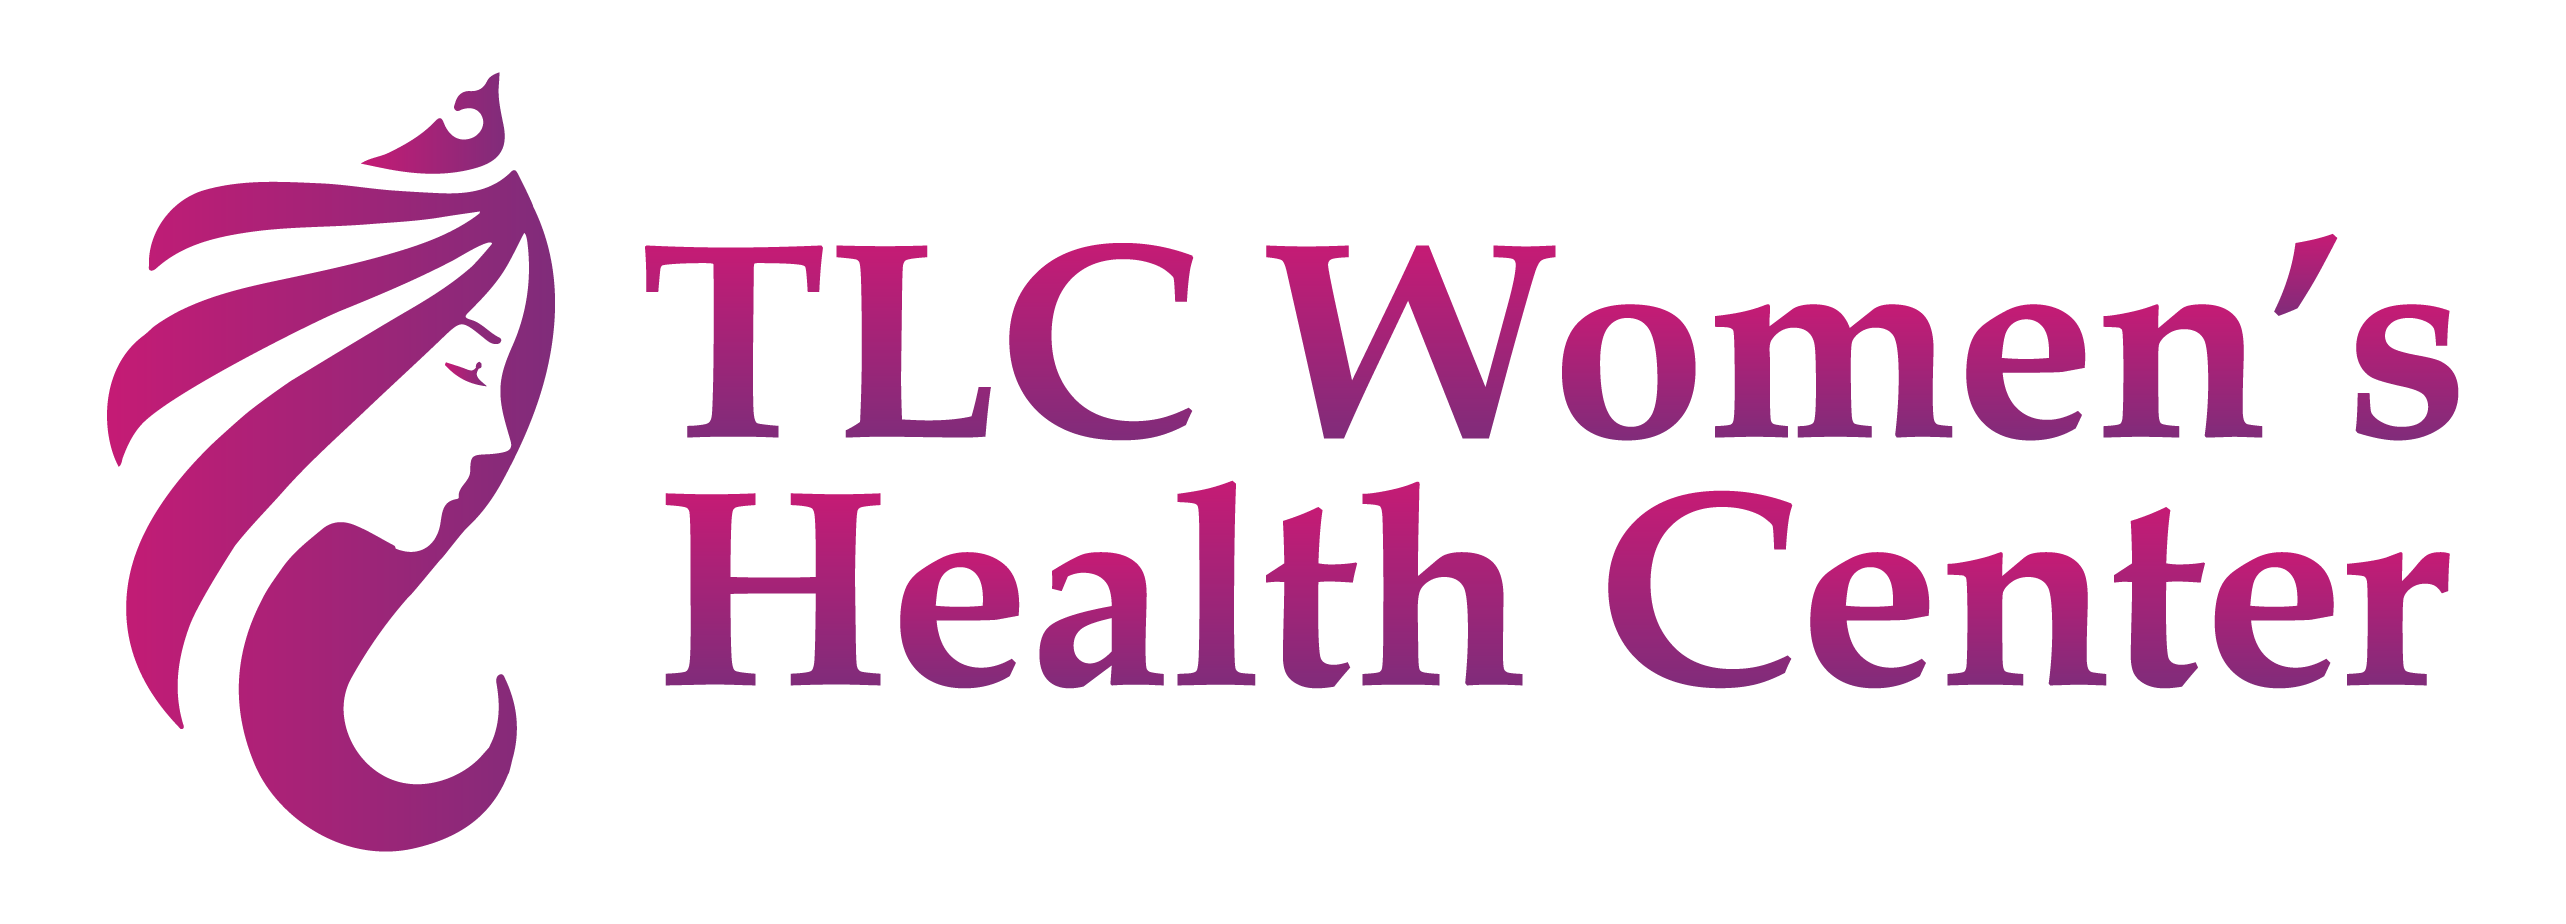 TLC Womens Health Center